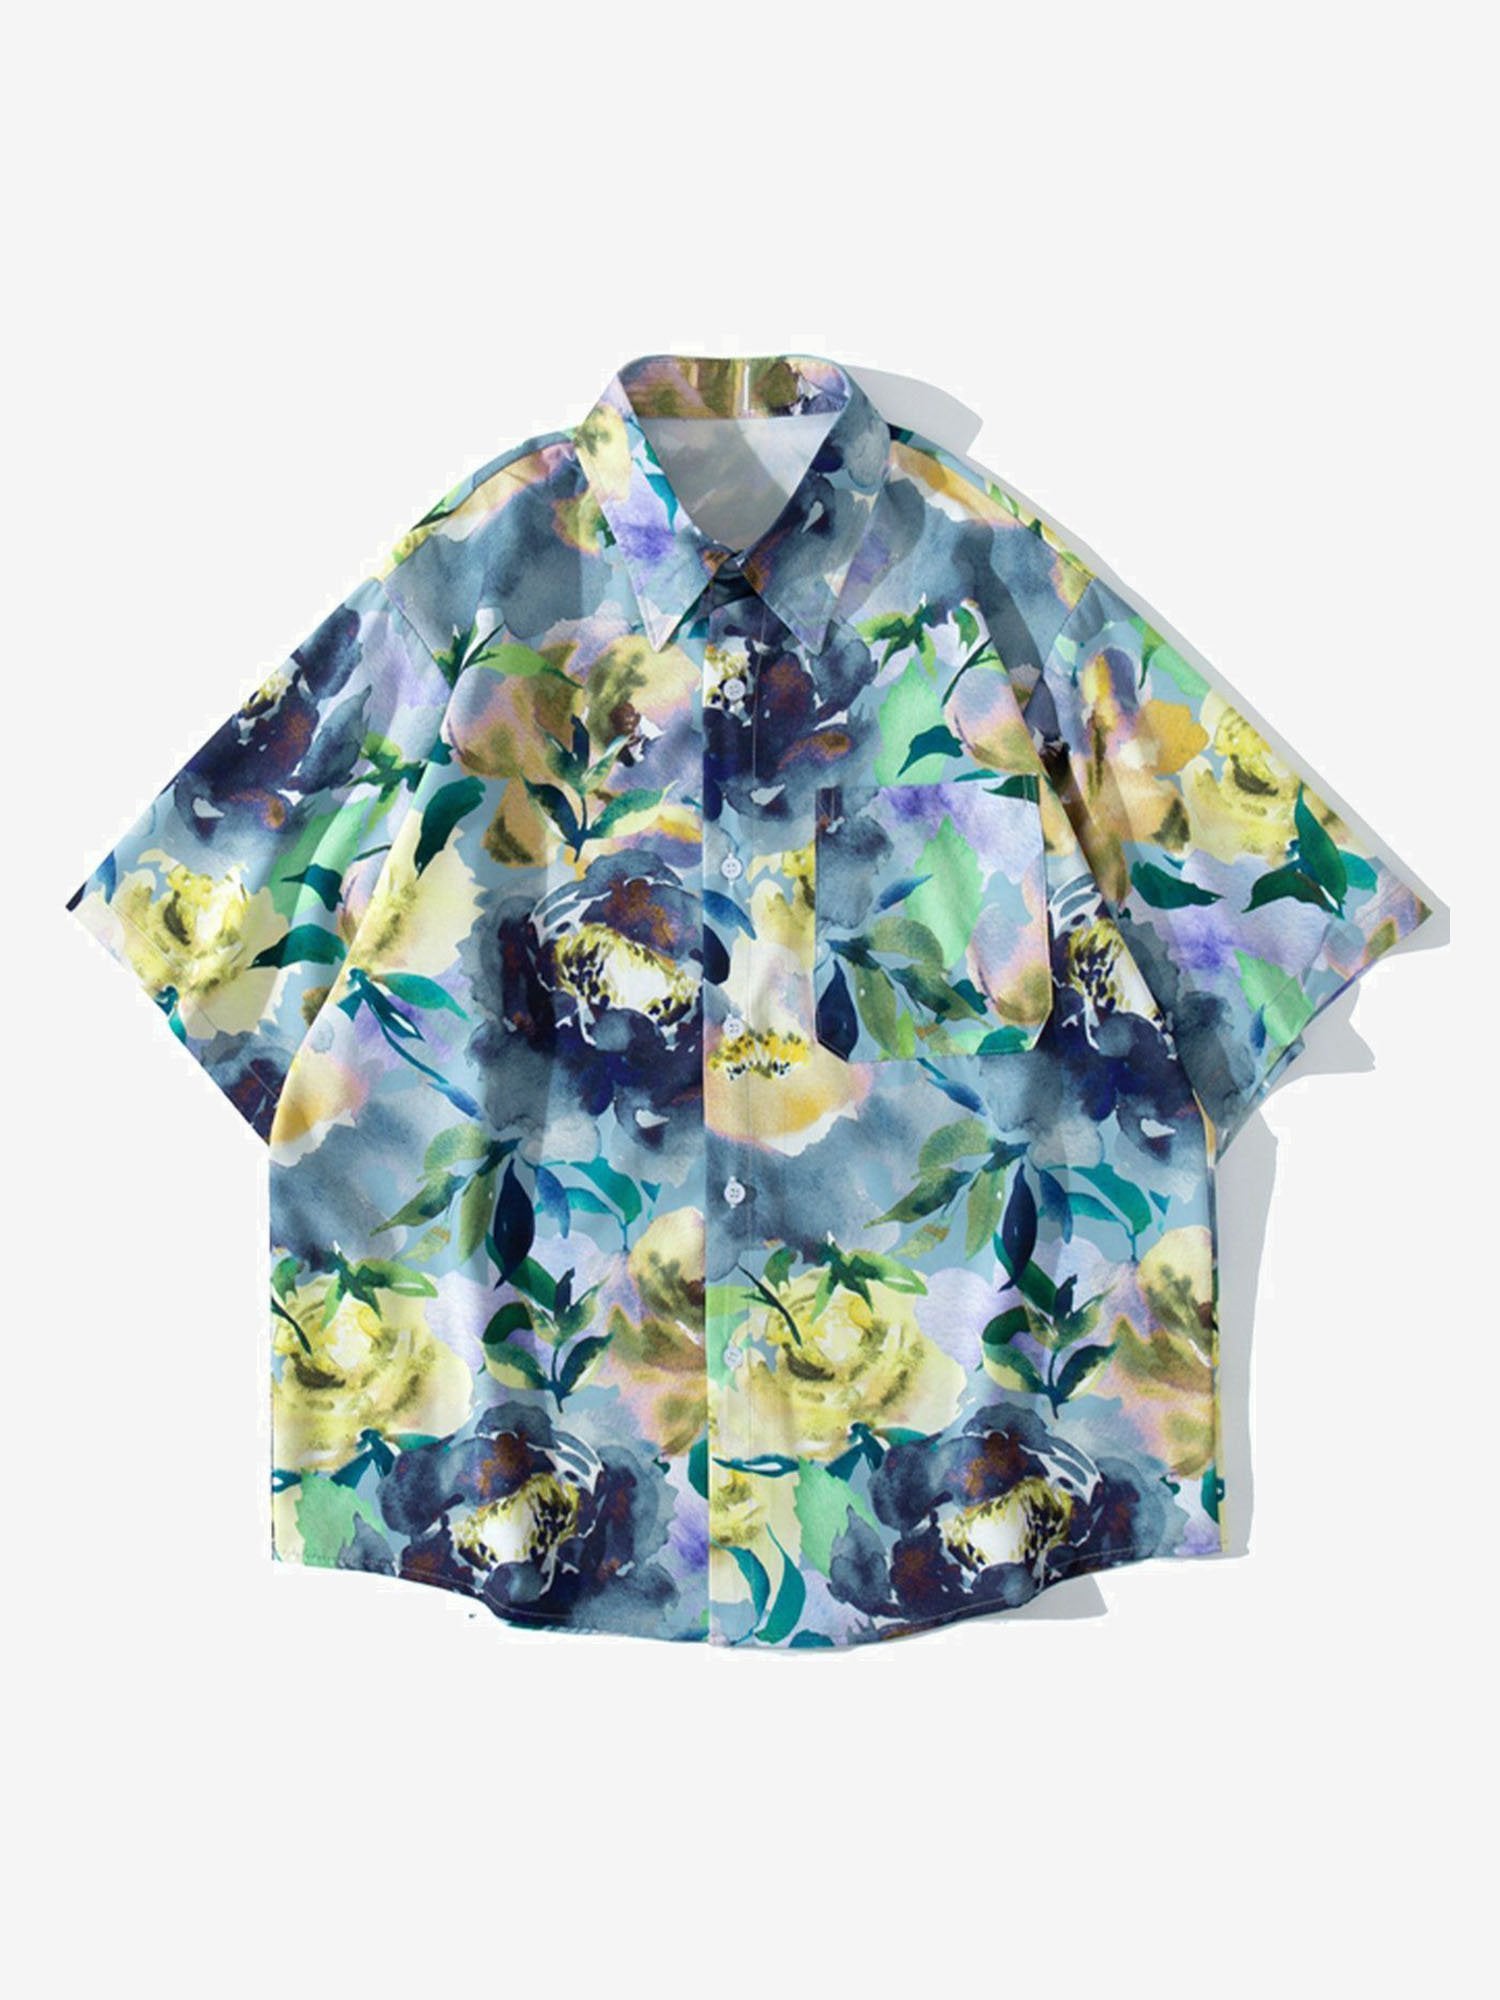 JUSTNOTAG Full Tropical Floral Holiday Style Short Sleeved Shirt